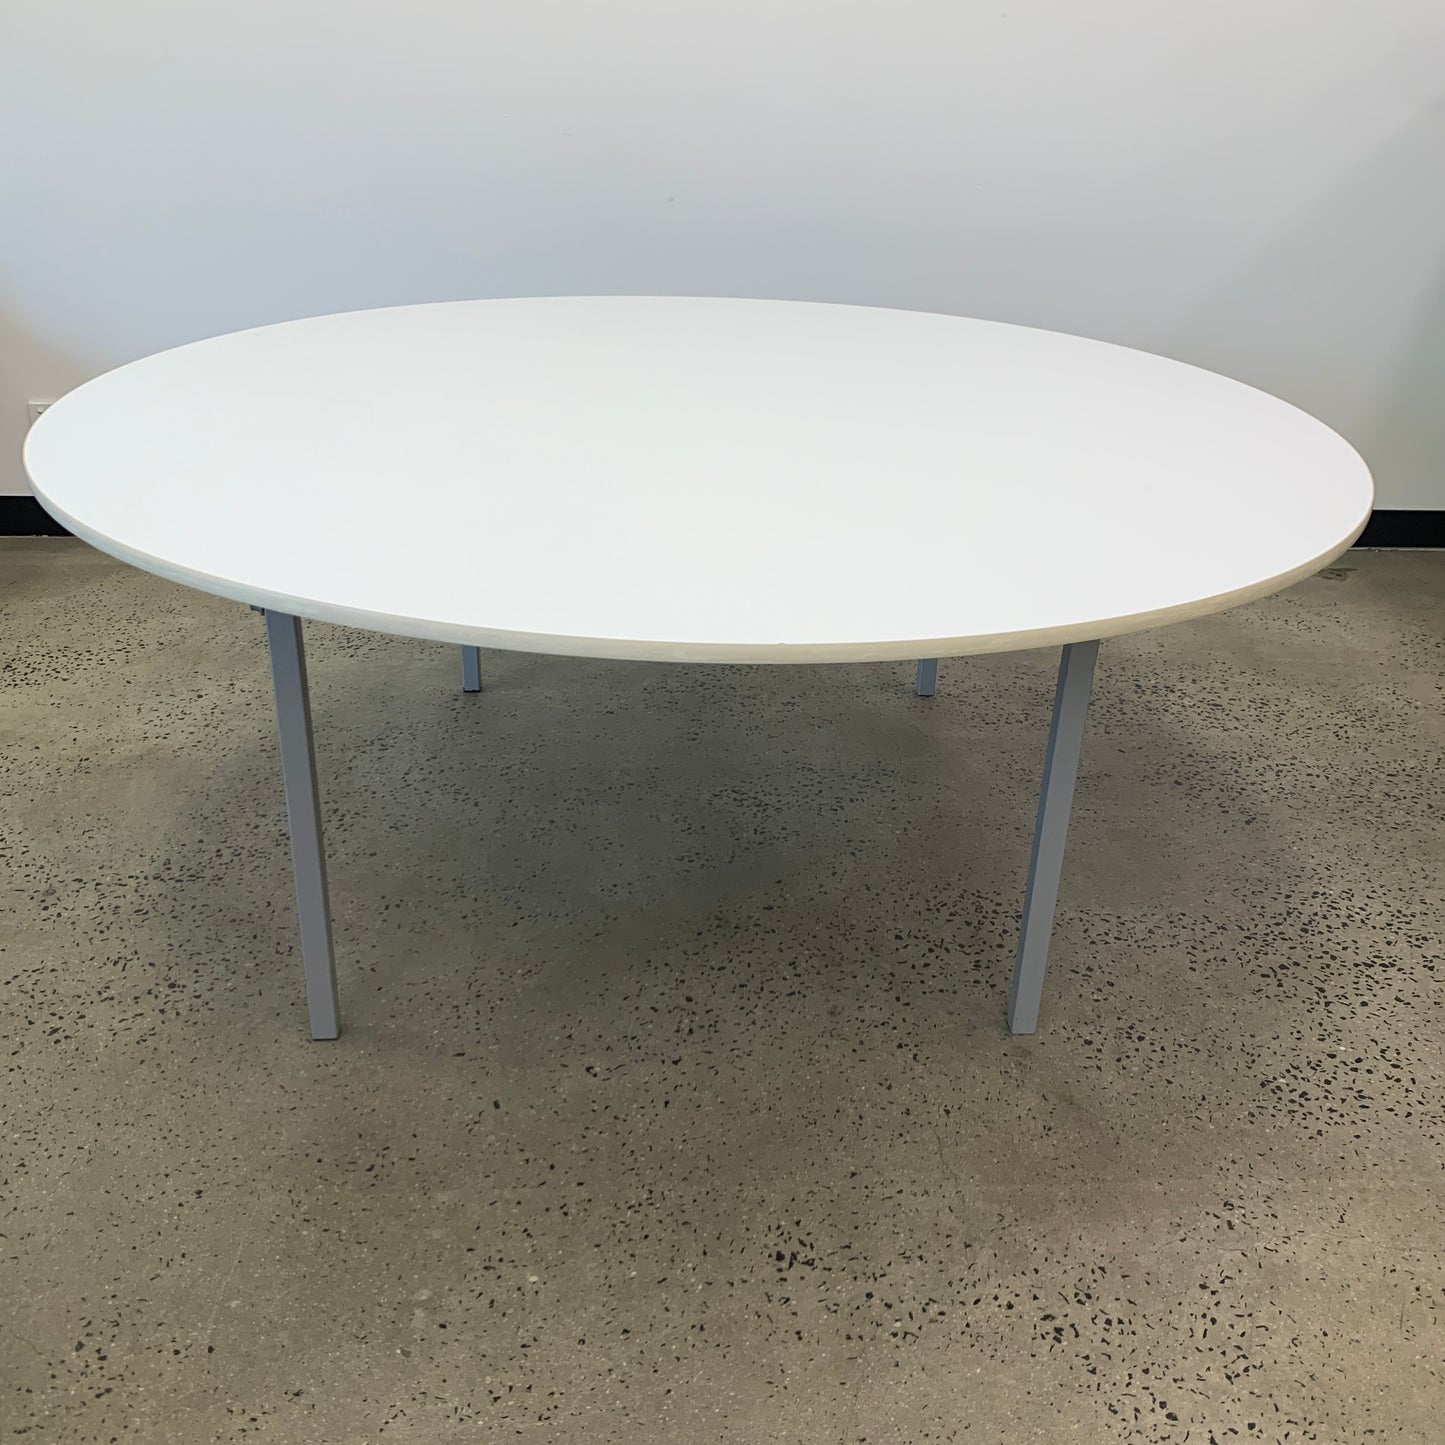 Sebel Large Folding Round Meeting Table White